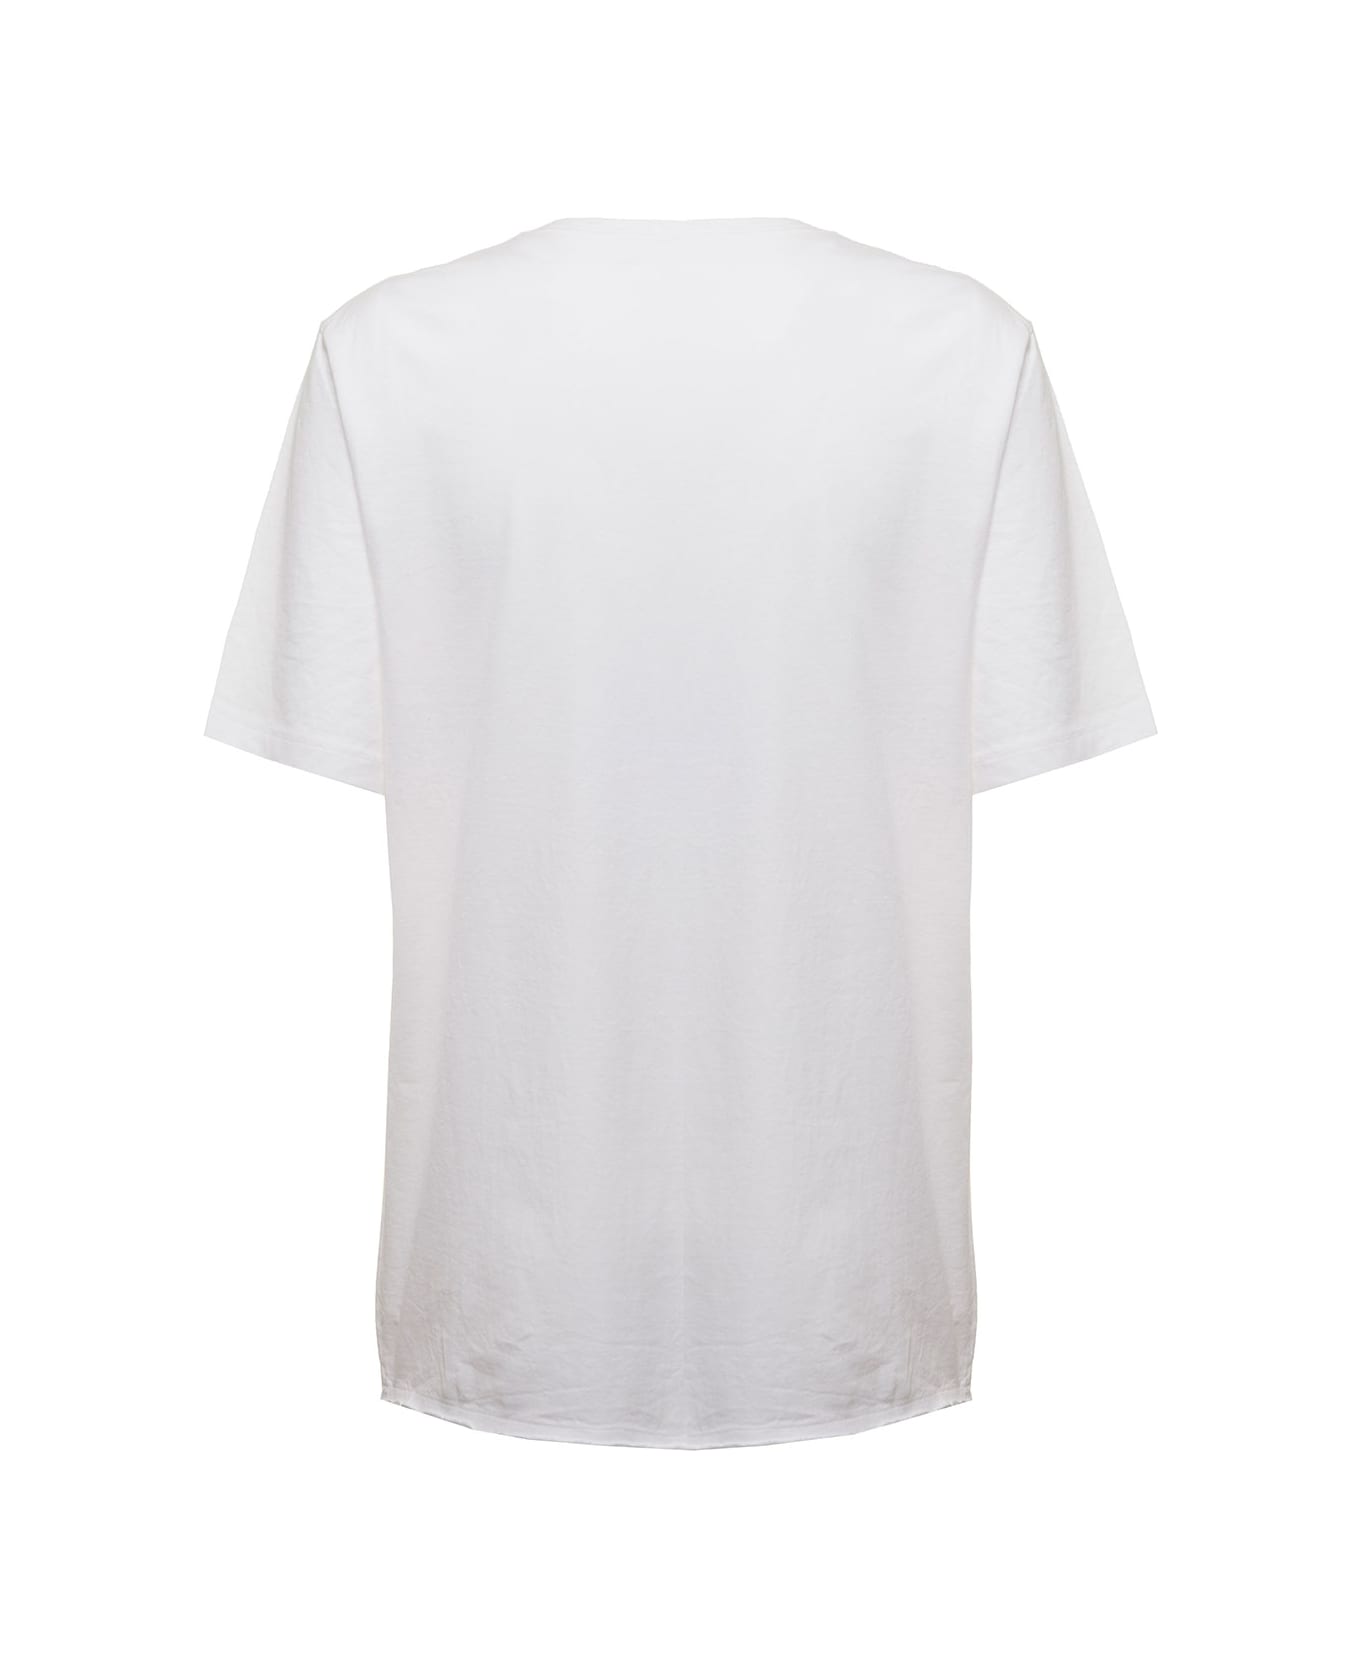 Saint Laurent Woman's White Cotton T-shirt With Heart Print - White